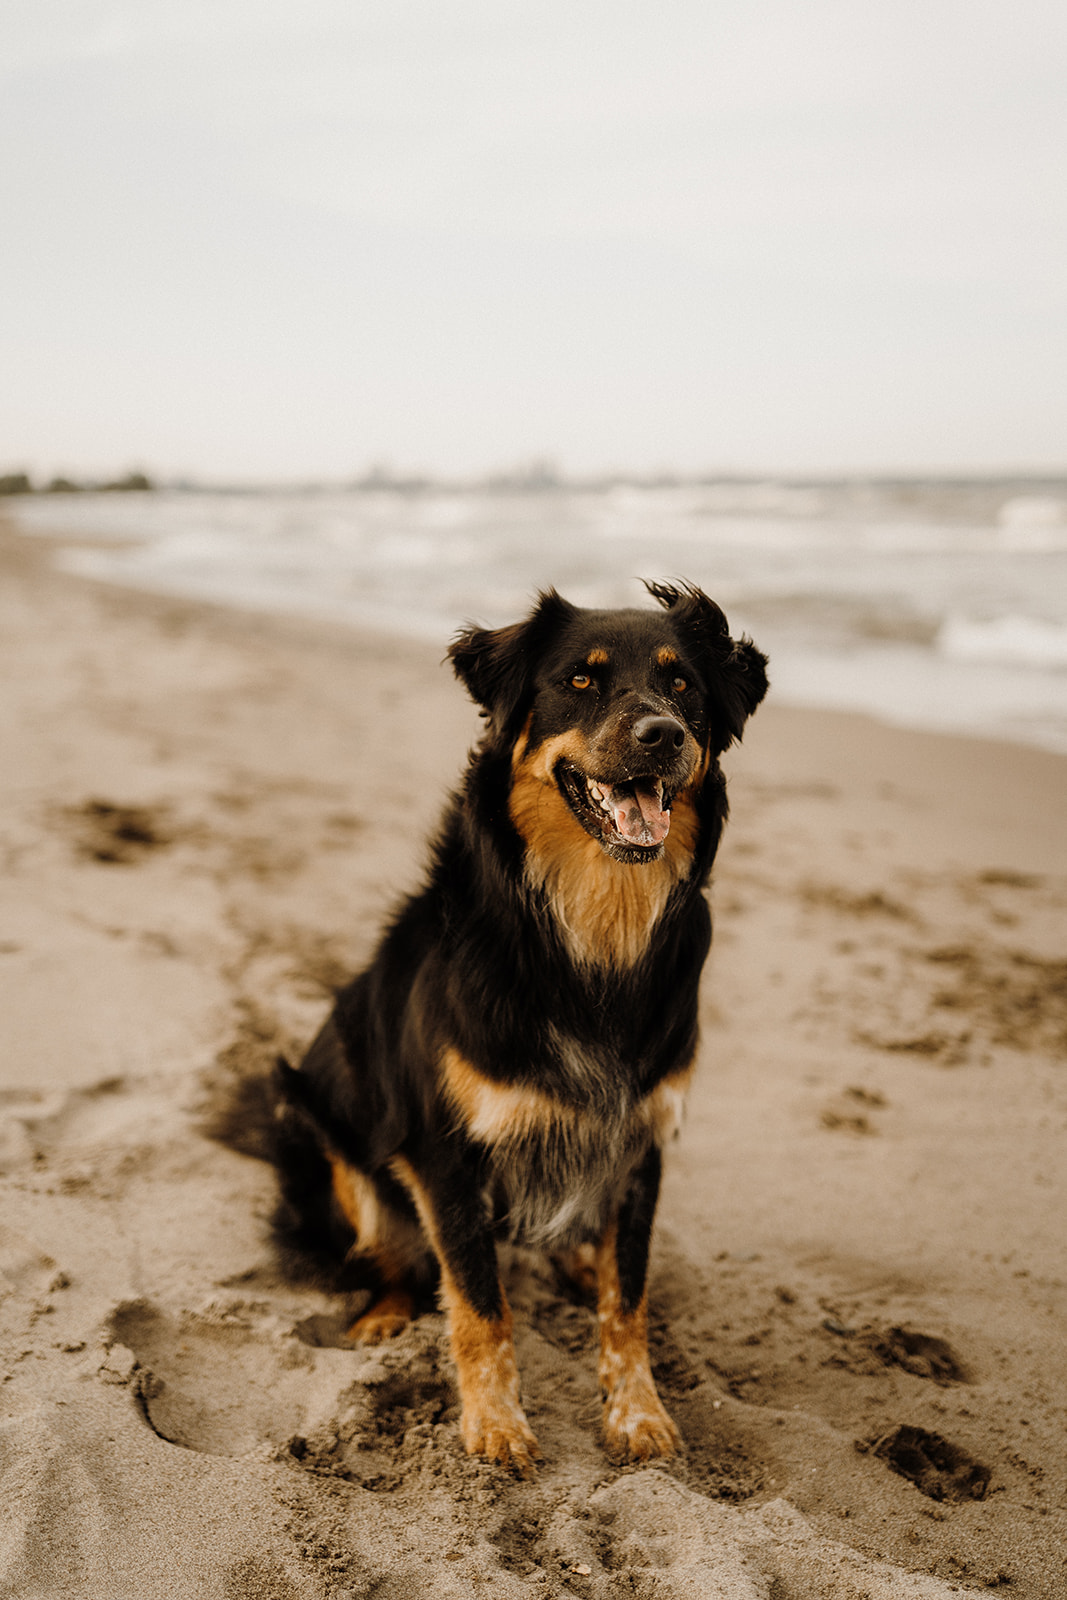 A dog sitting on the beach.